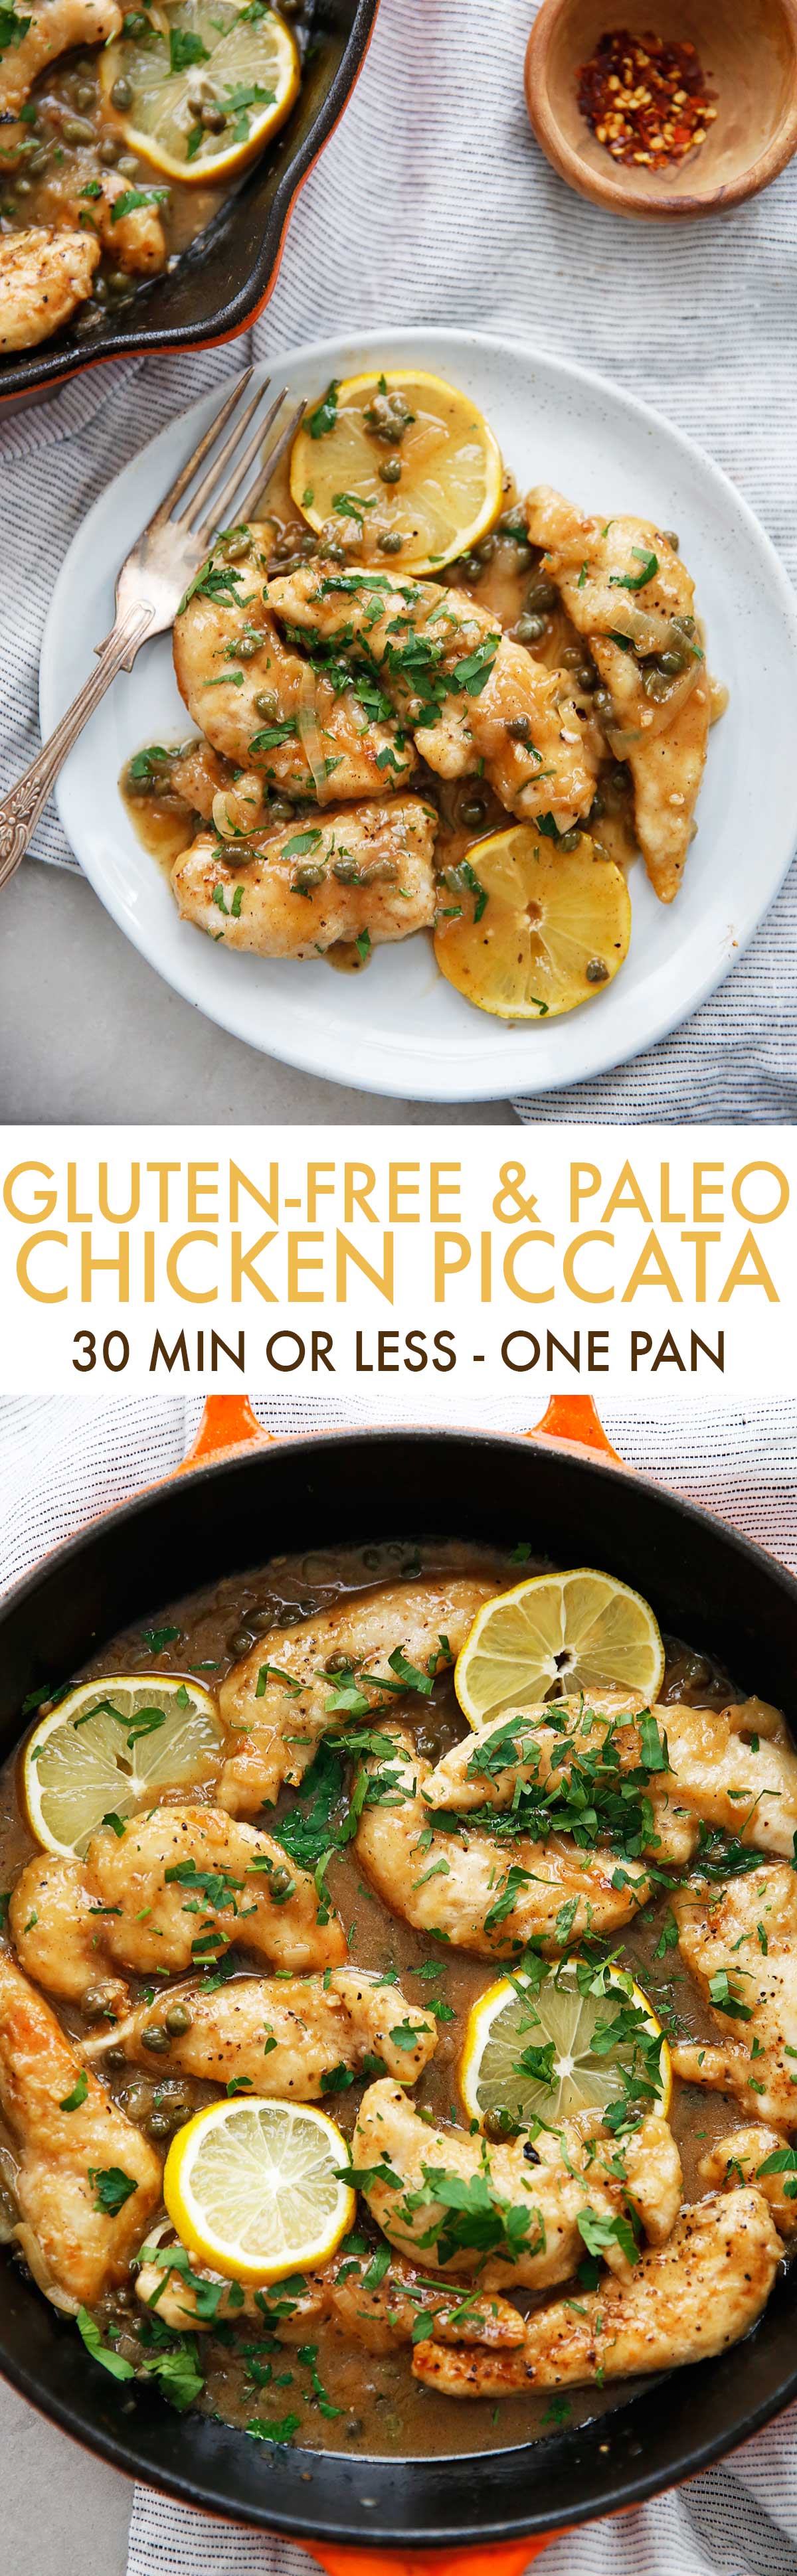 The BEST Gluten-Free Chicken Piccata With No Flour or Dairy!